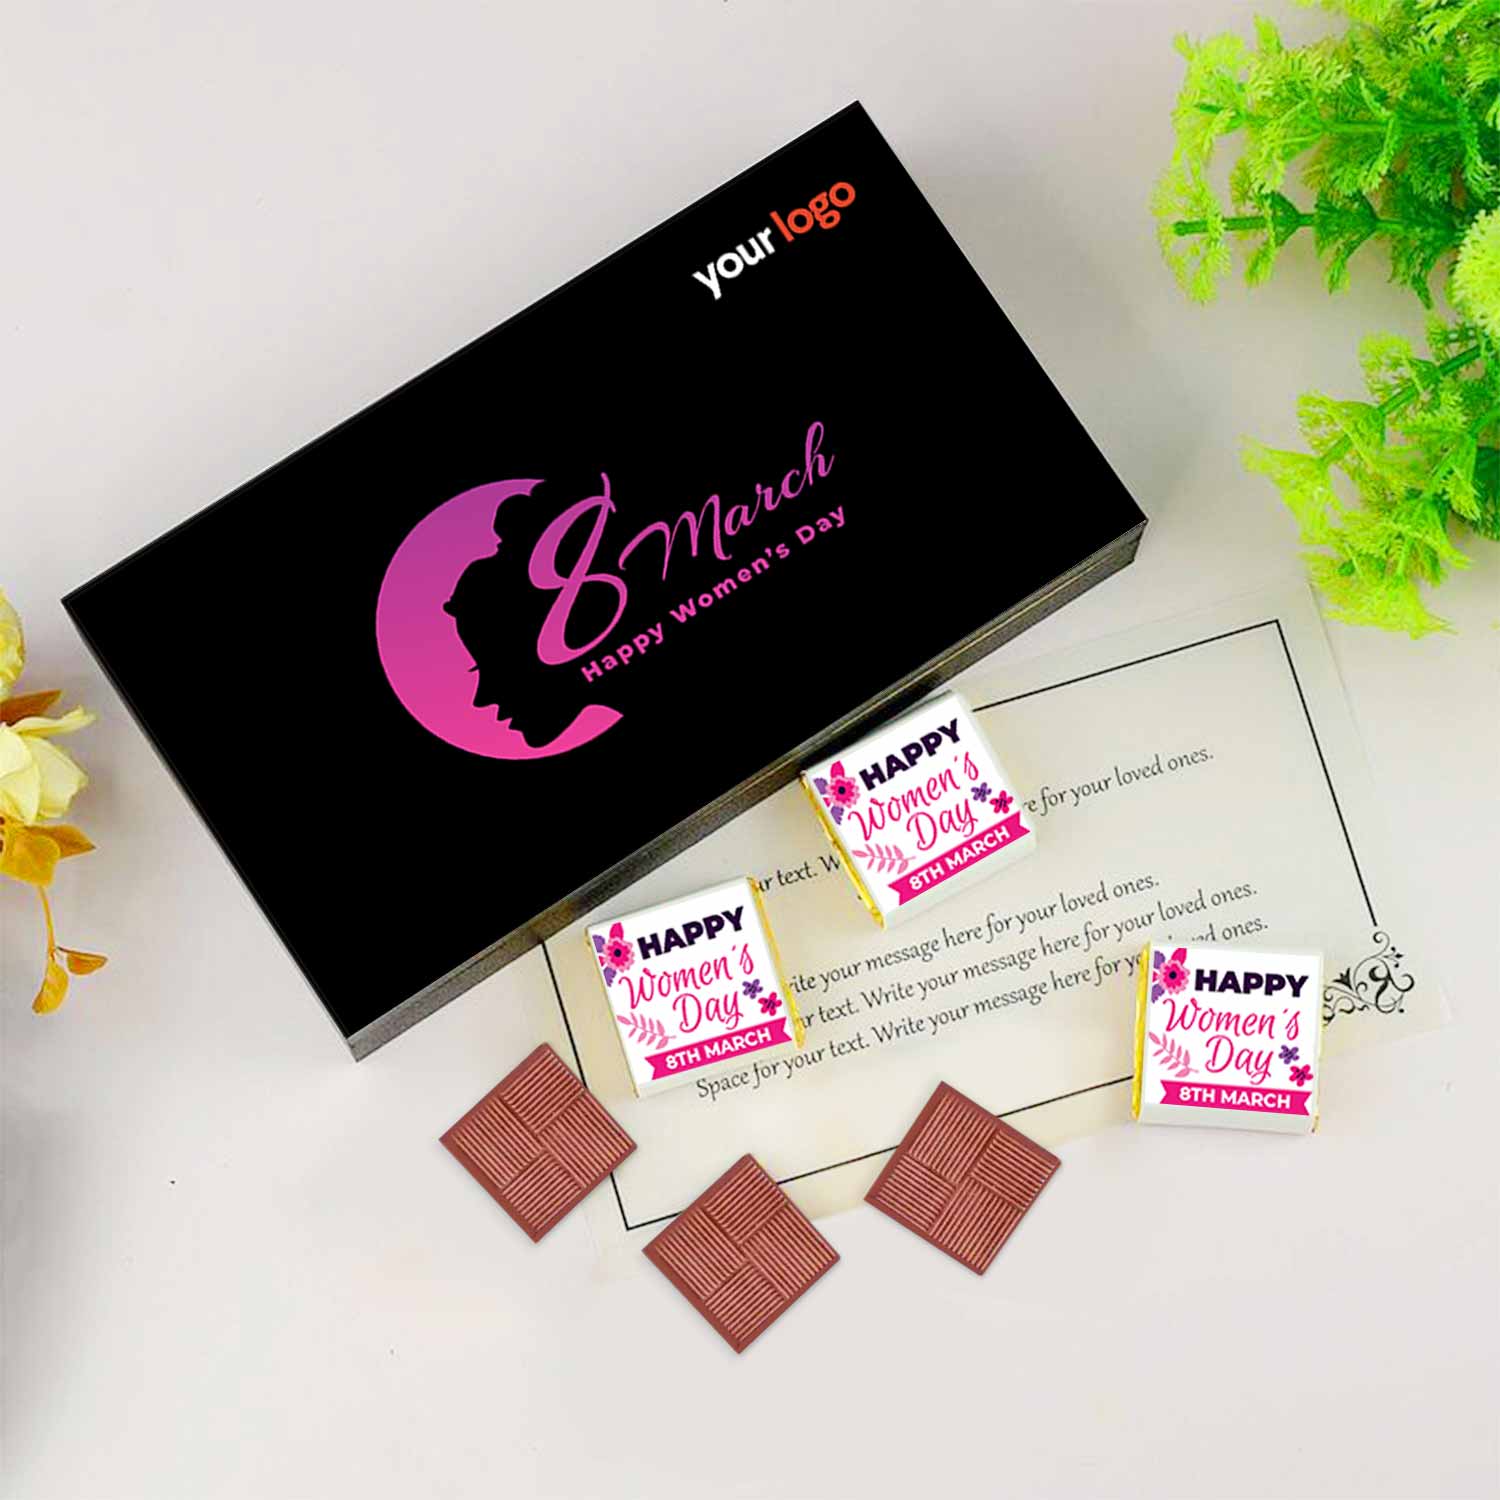 Woman's shadow printed pink designer gift of chocolates